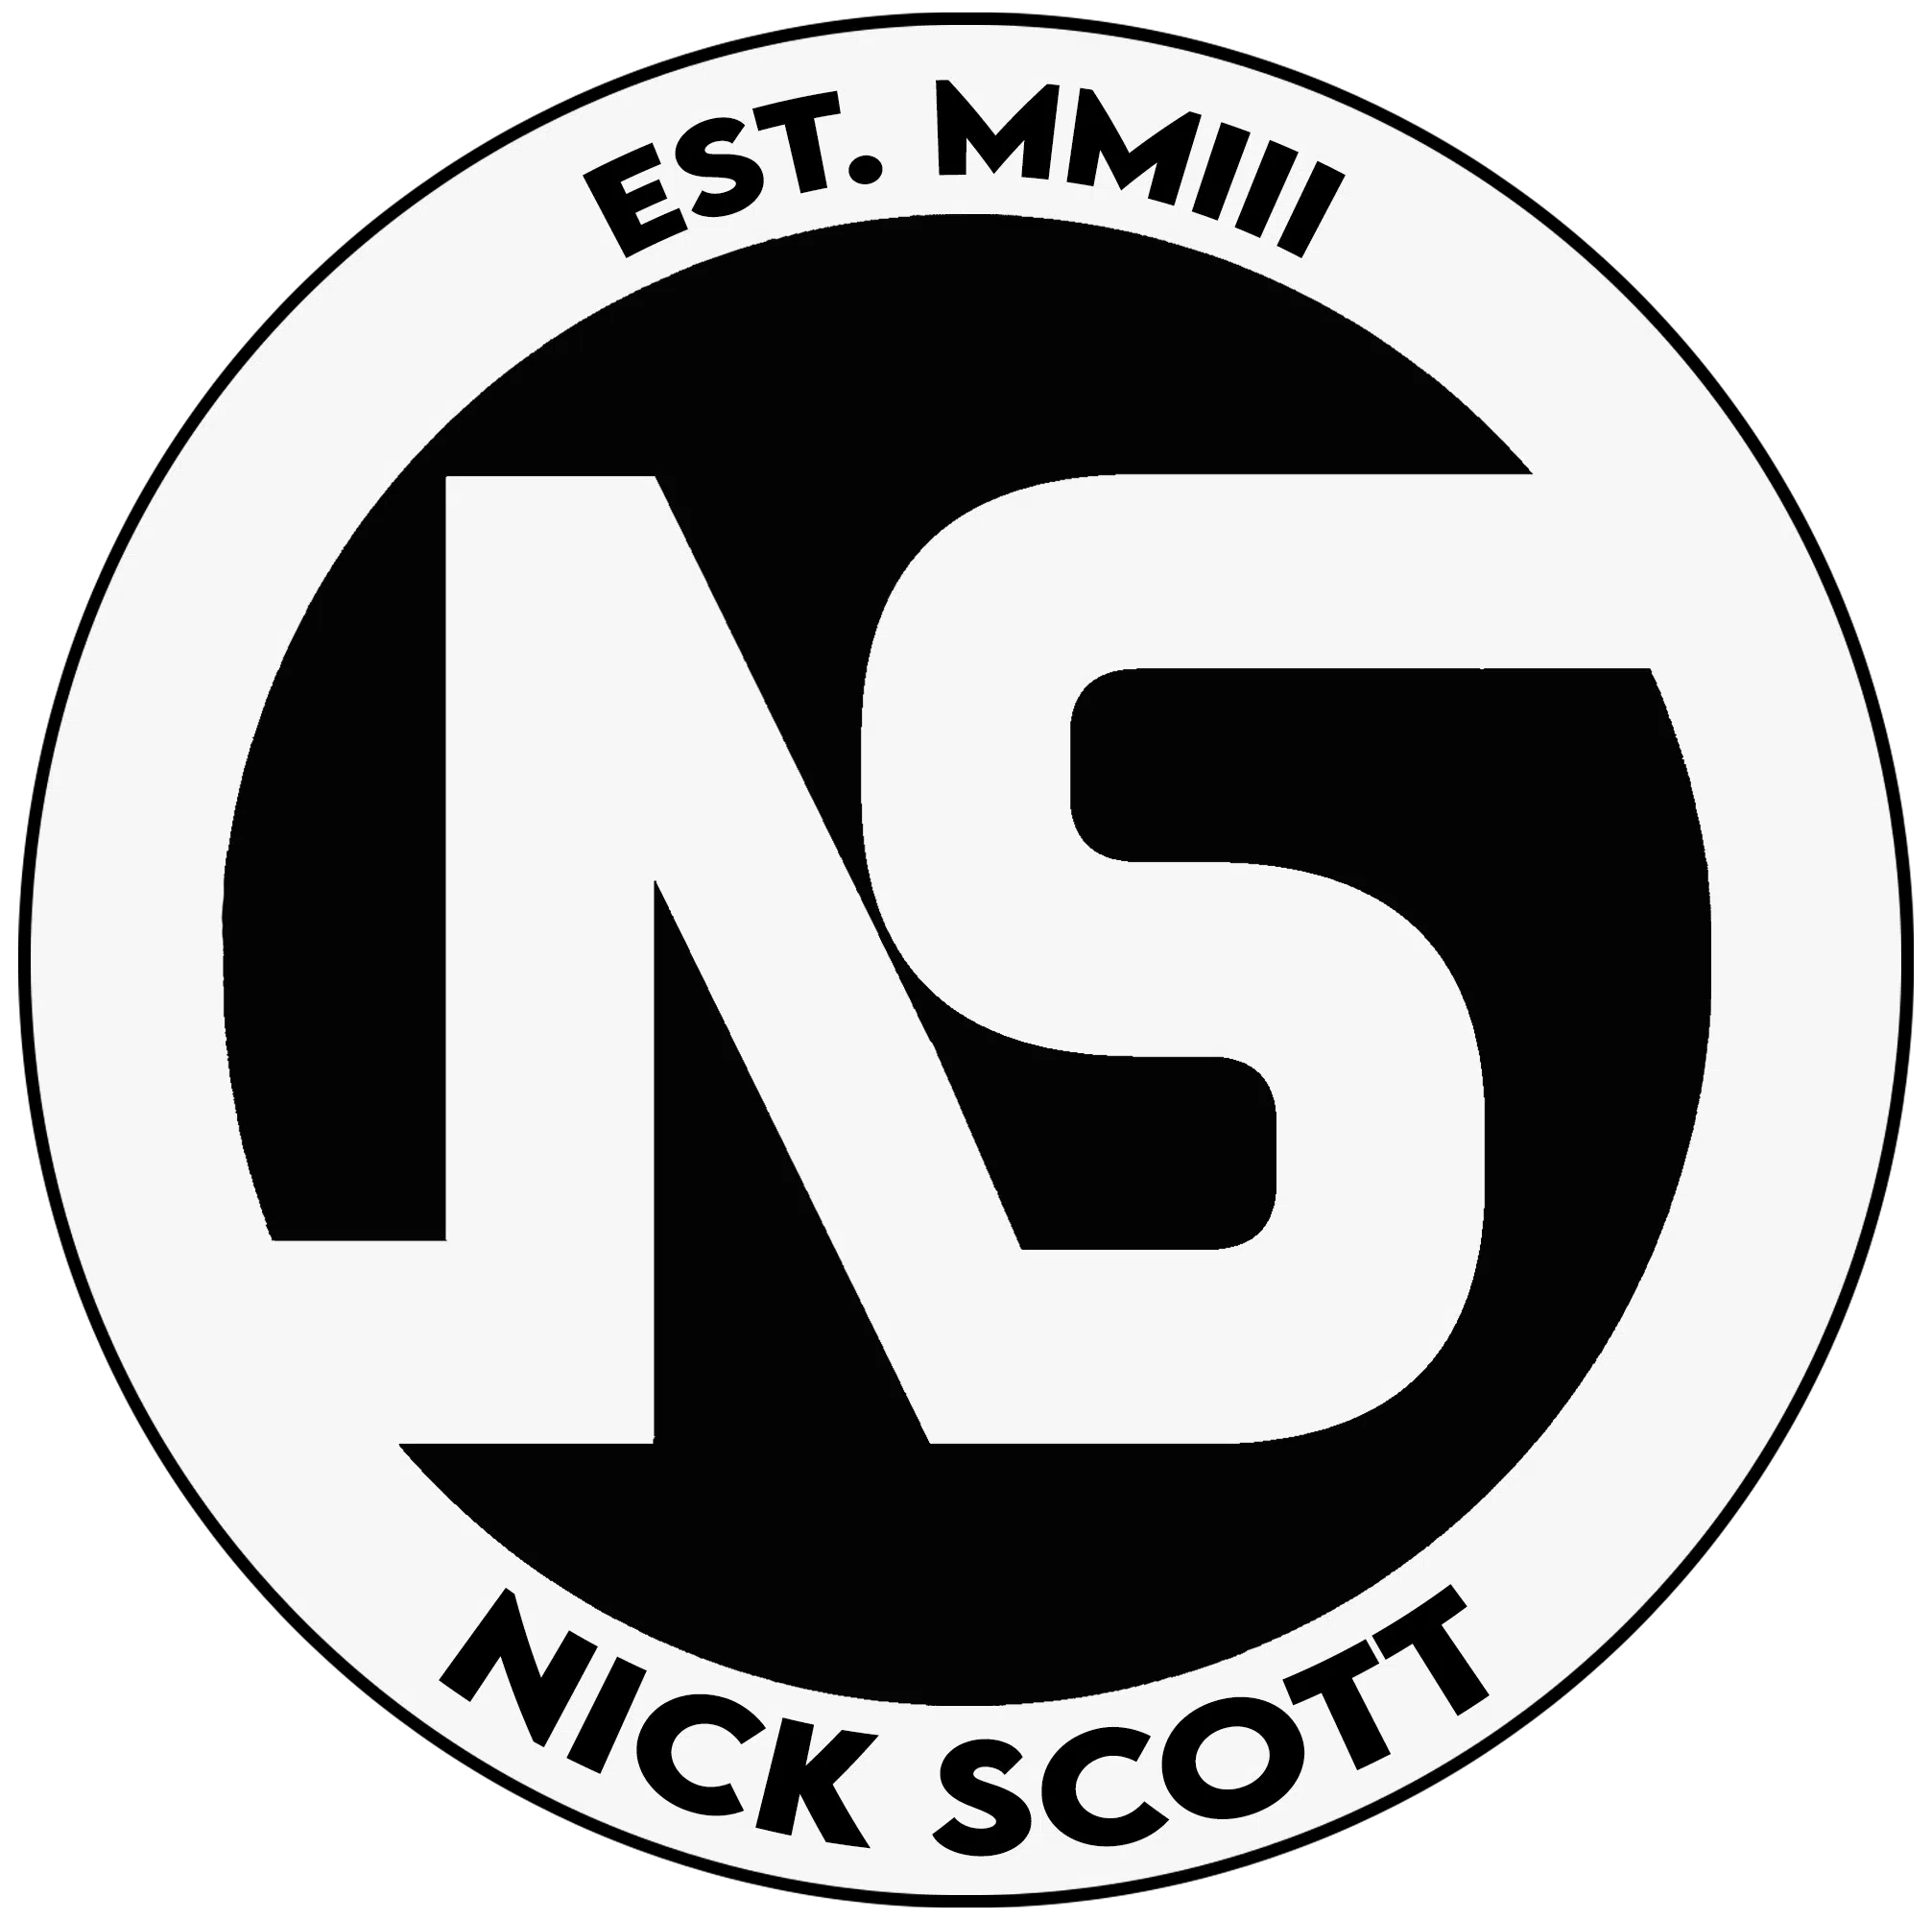 Nick Scott - Event & Wedding DJ | Podcast Host